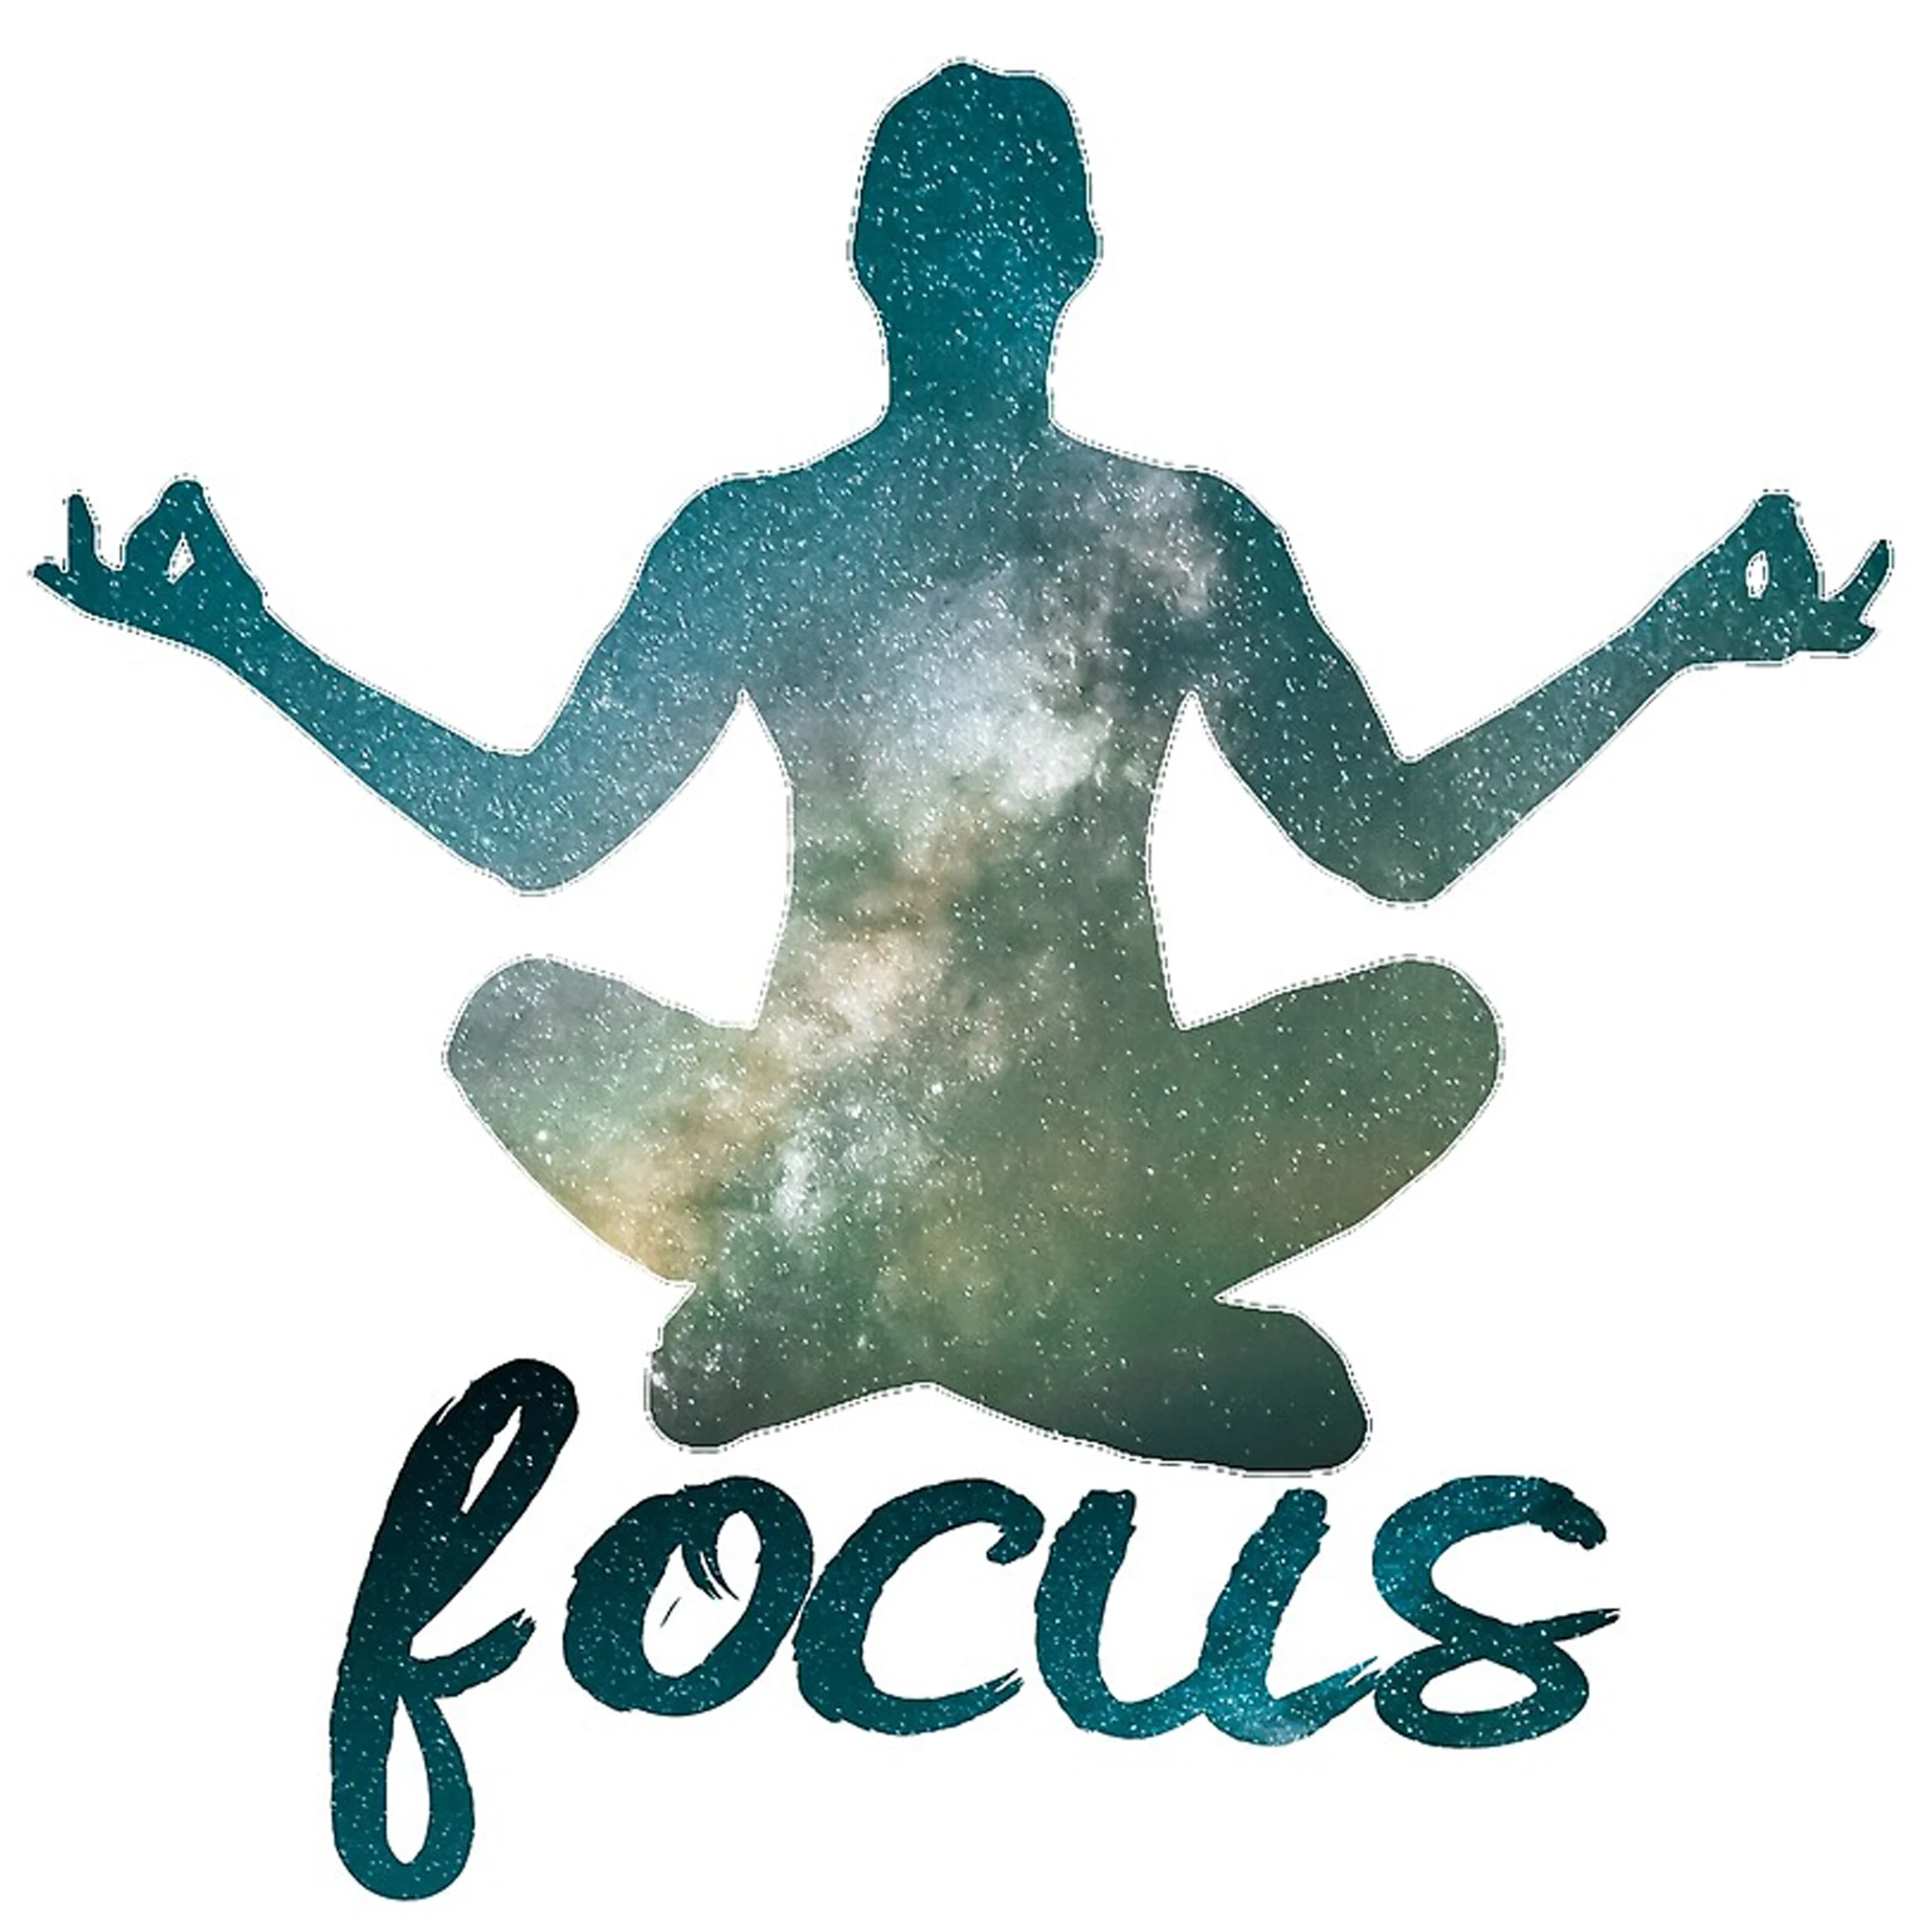 Meditation Yoga, spirituality and meditation focus on the galactic backdrop of the universe